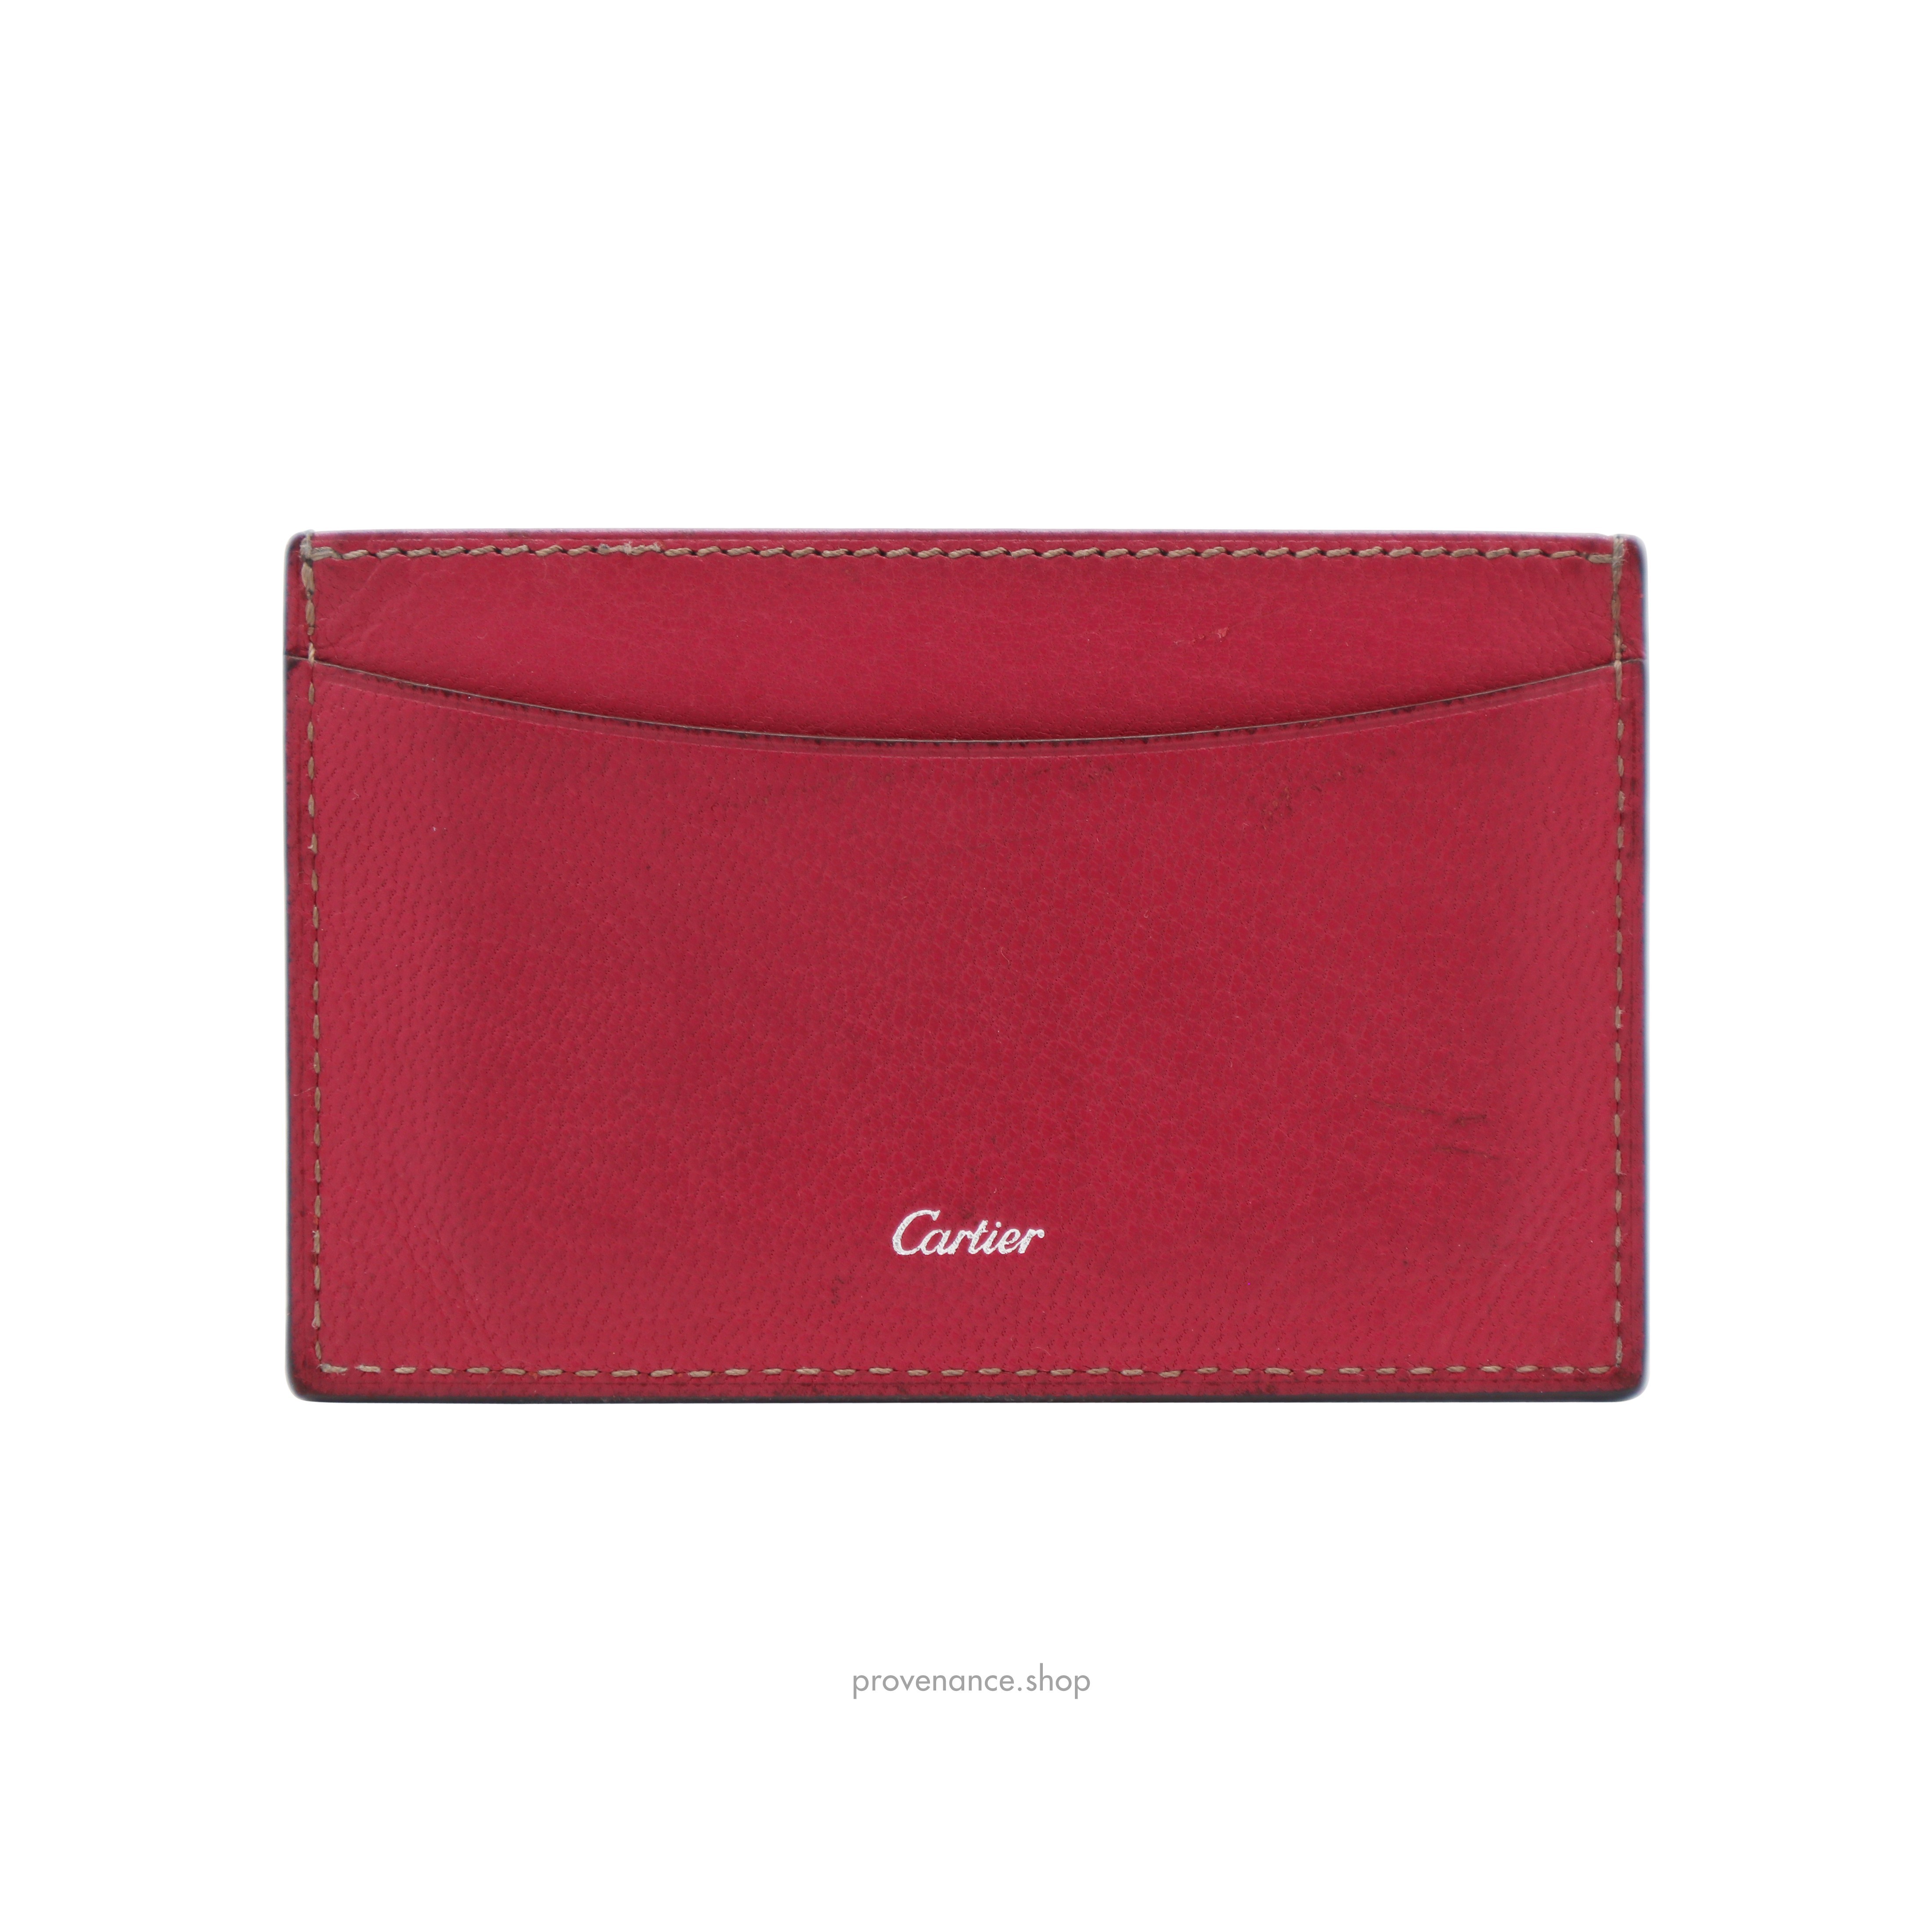 Cartier Card Holder - Raspberry Chevre Leather - 2